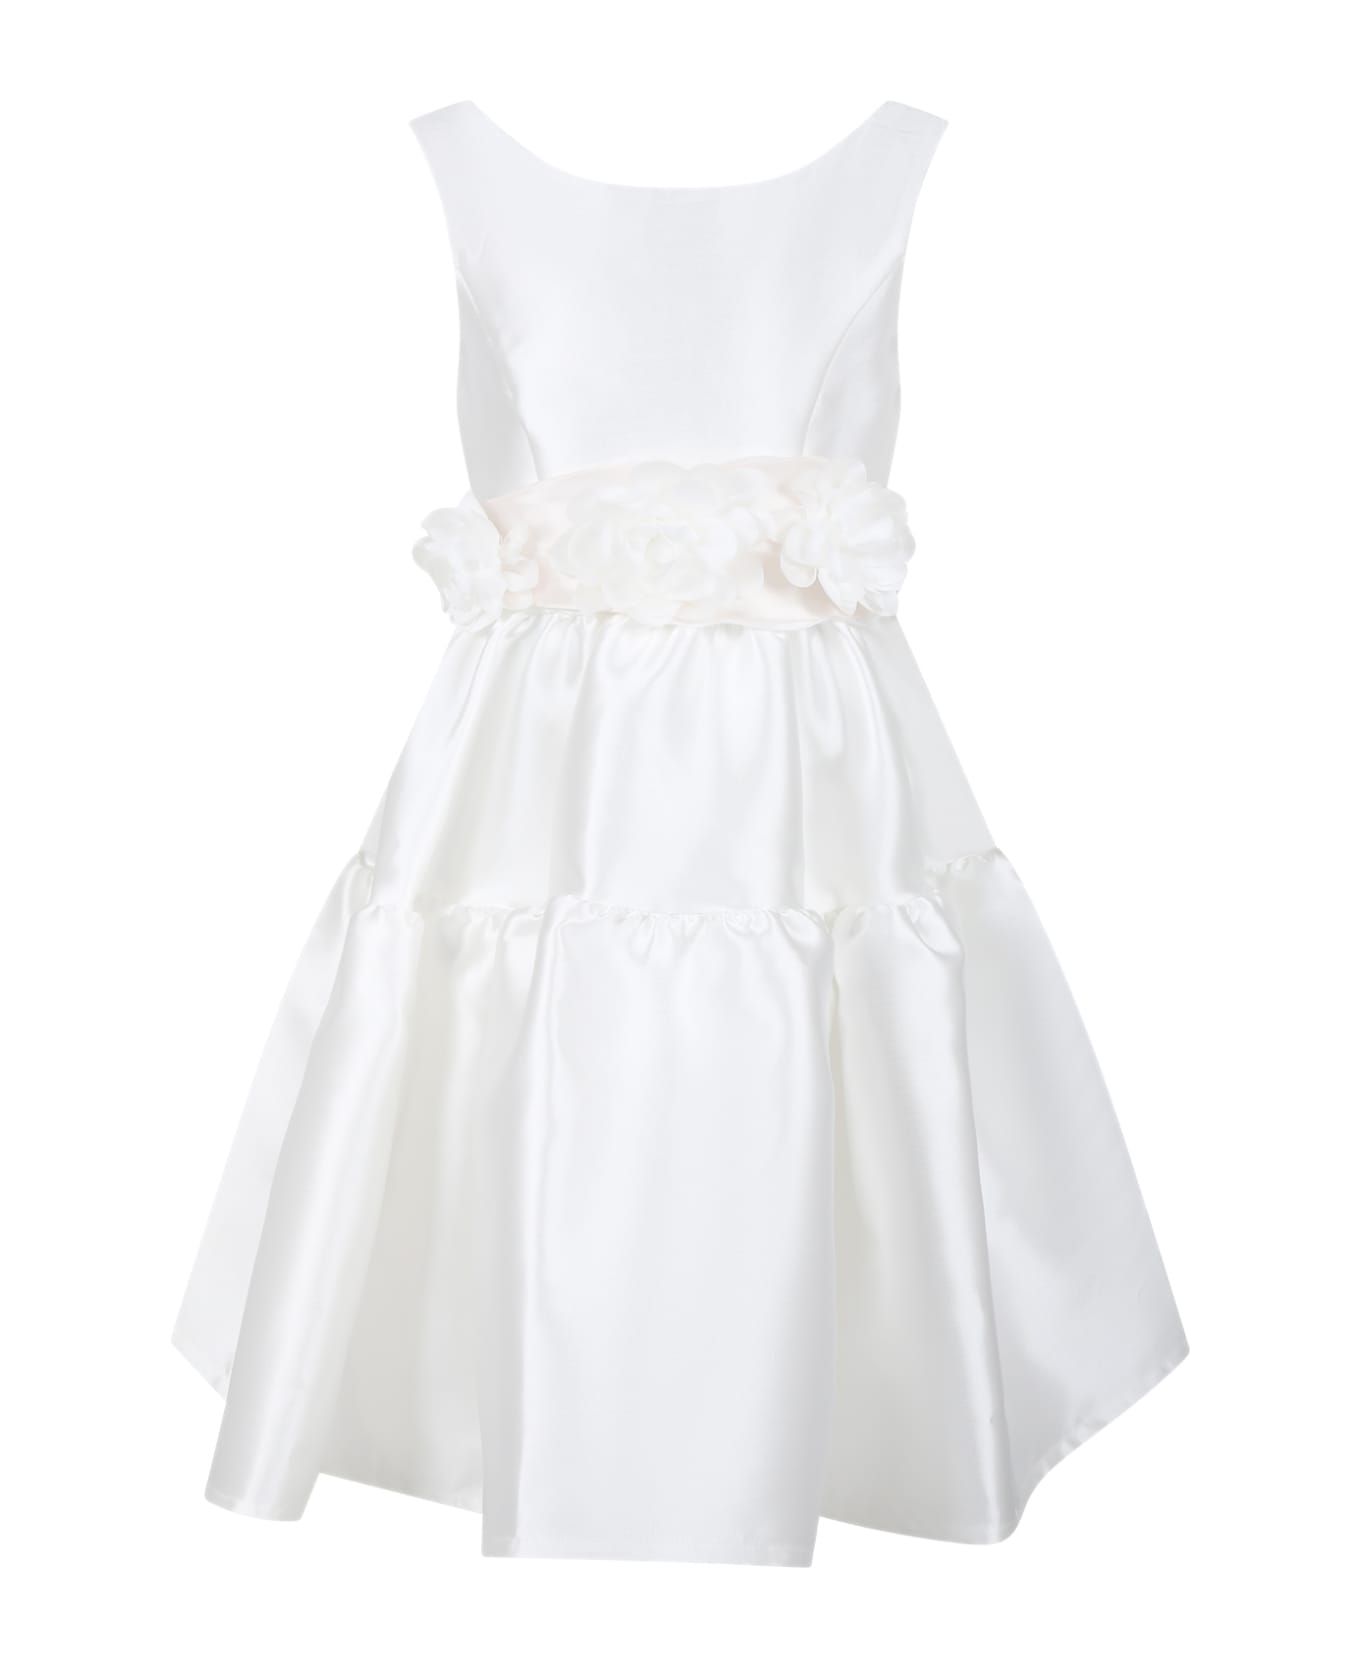 Monnalisa White Dress For Girl With Bow - White